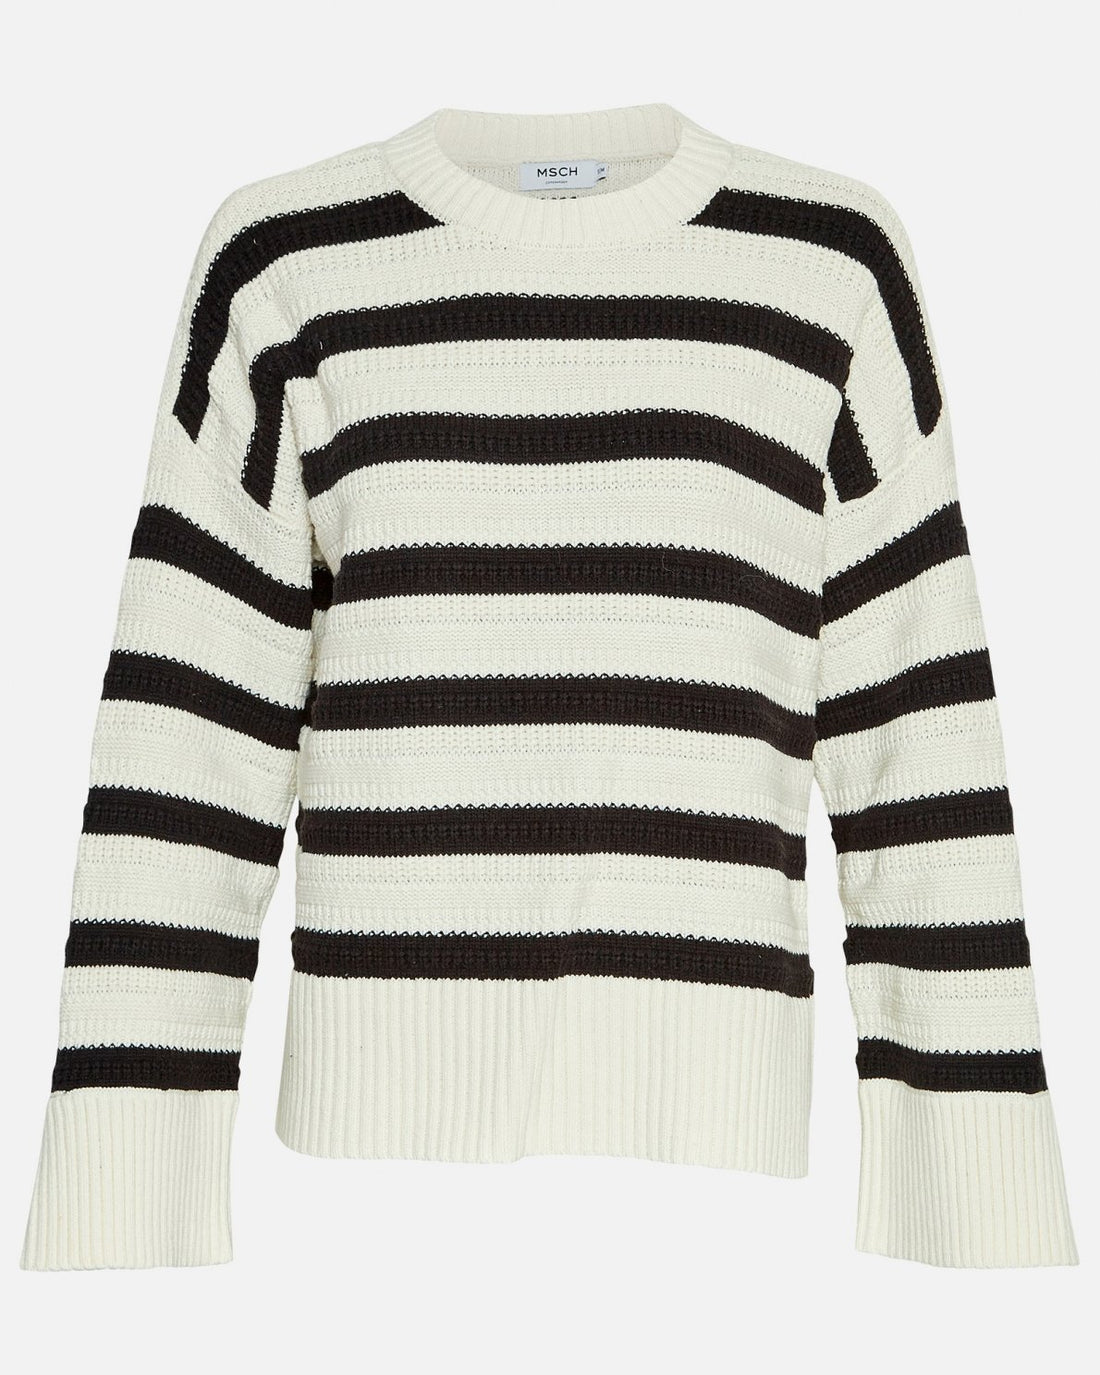 MSCH Jillena Knitted Pullover in Black &amp; Egret Stripe